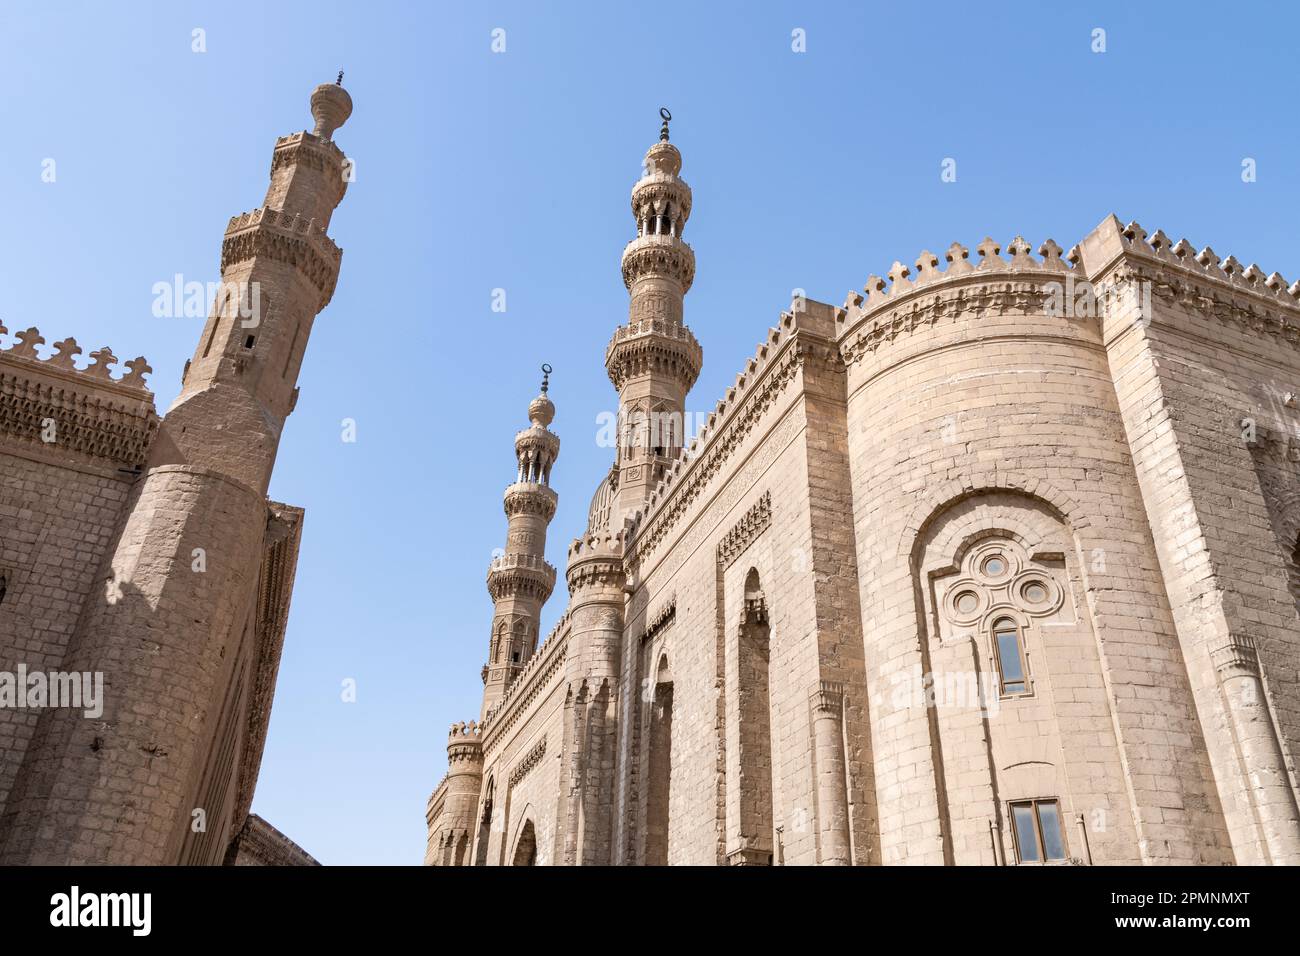 A view of Al-Rifai Mosque in Cairo, Egypt Stock Photo